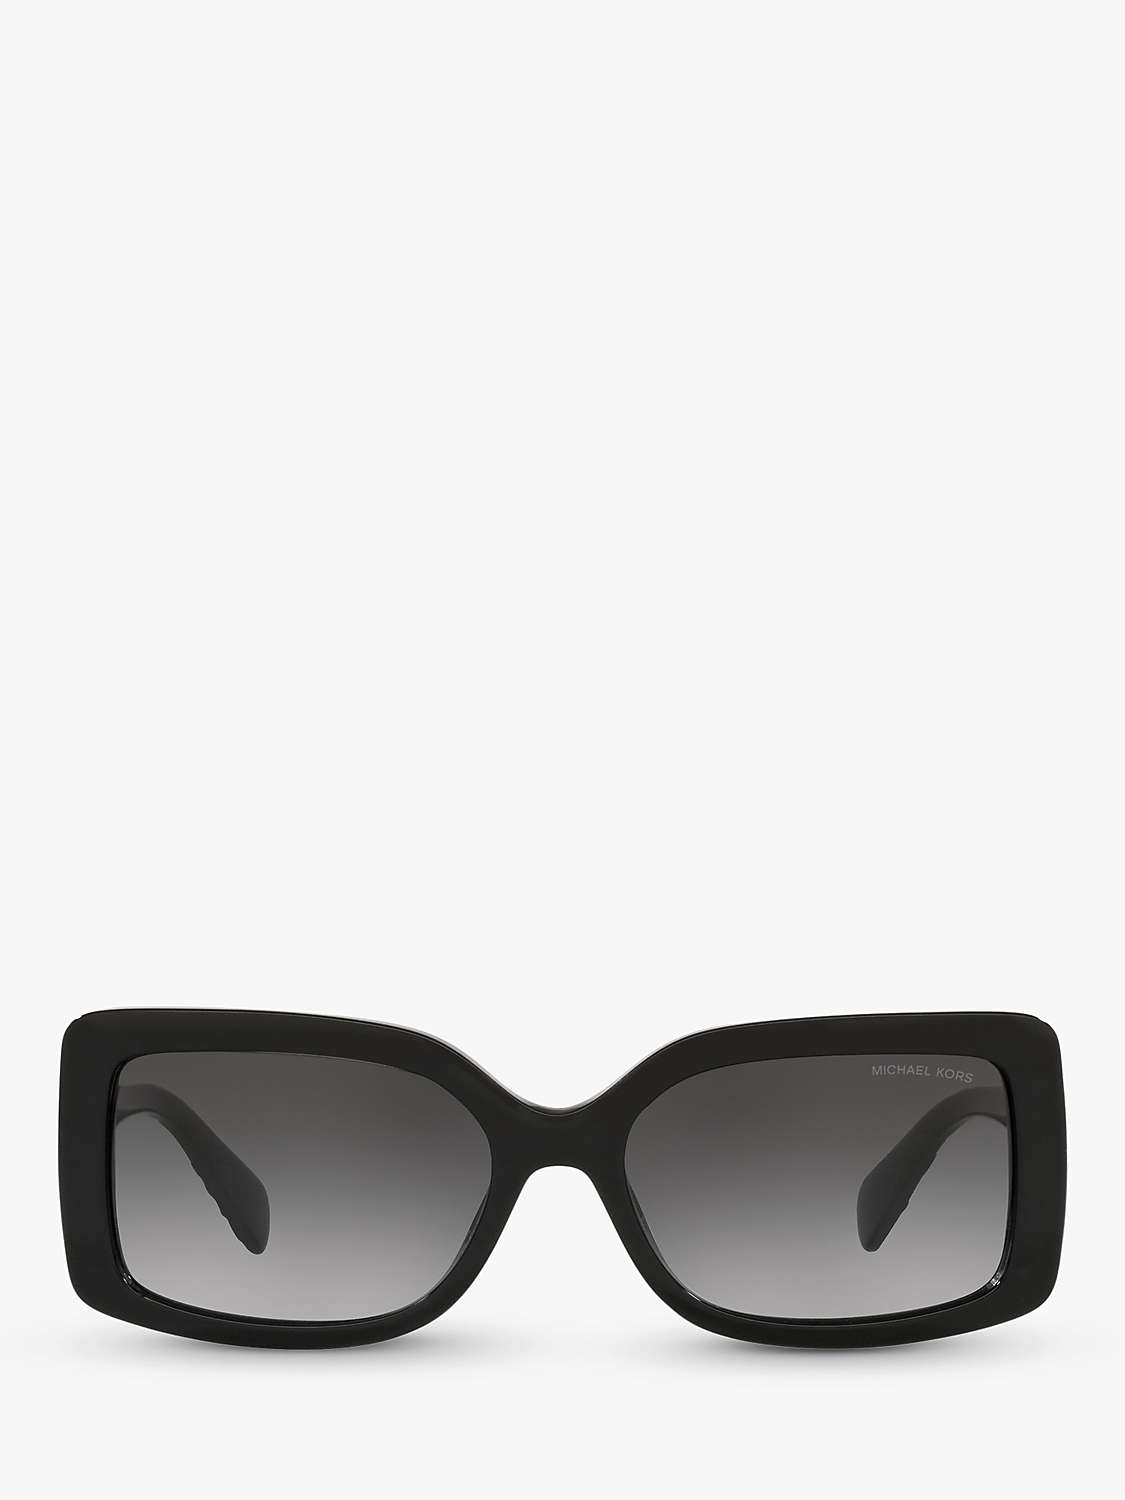 Michael Kors MK2165 Women's Corfu Rectangular Sunglasses, Black/Grey ...